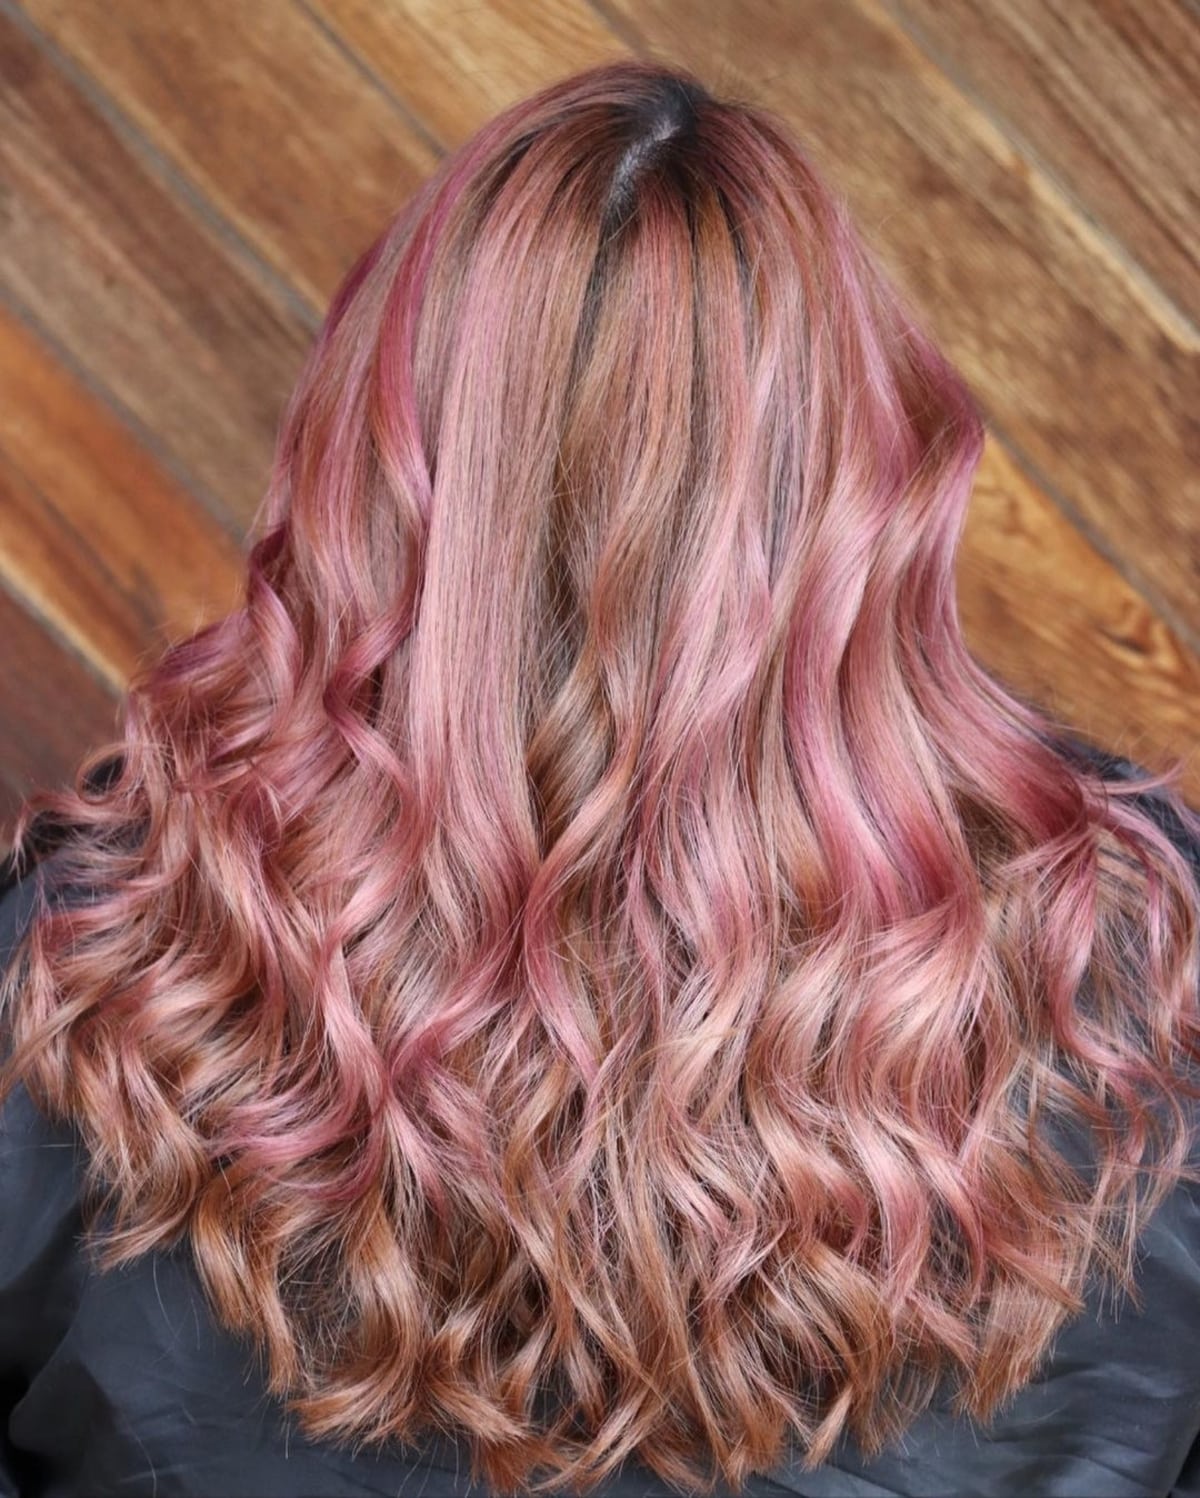 Metallic Rose Gold and Pink Hair Highlights